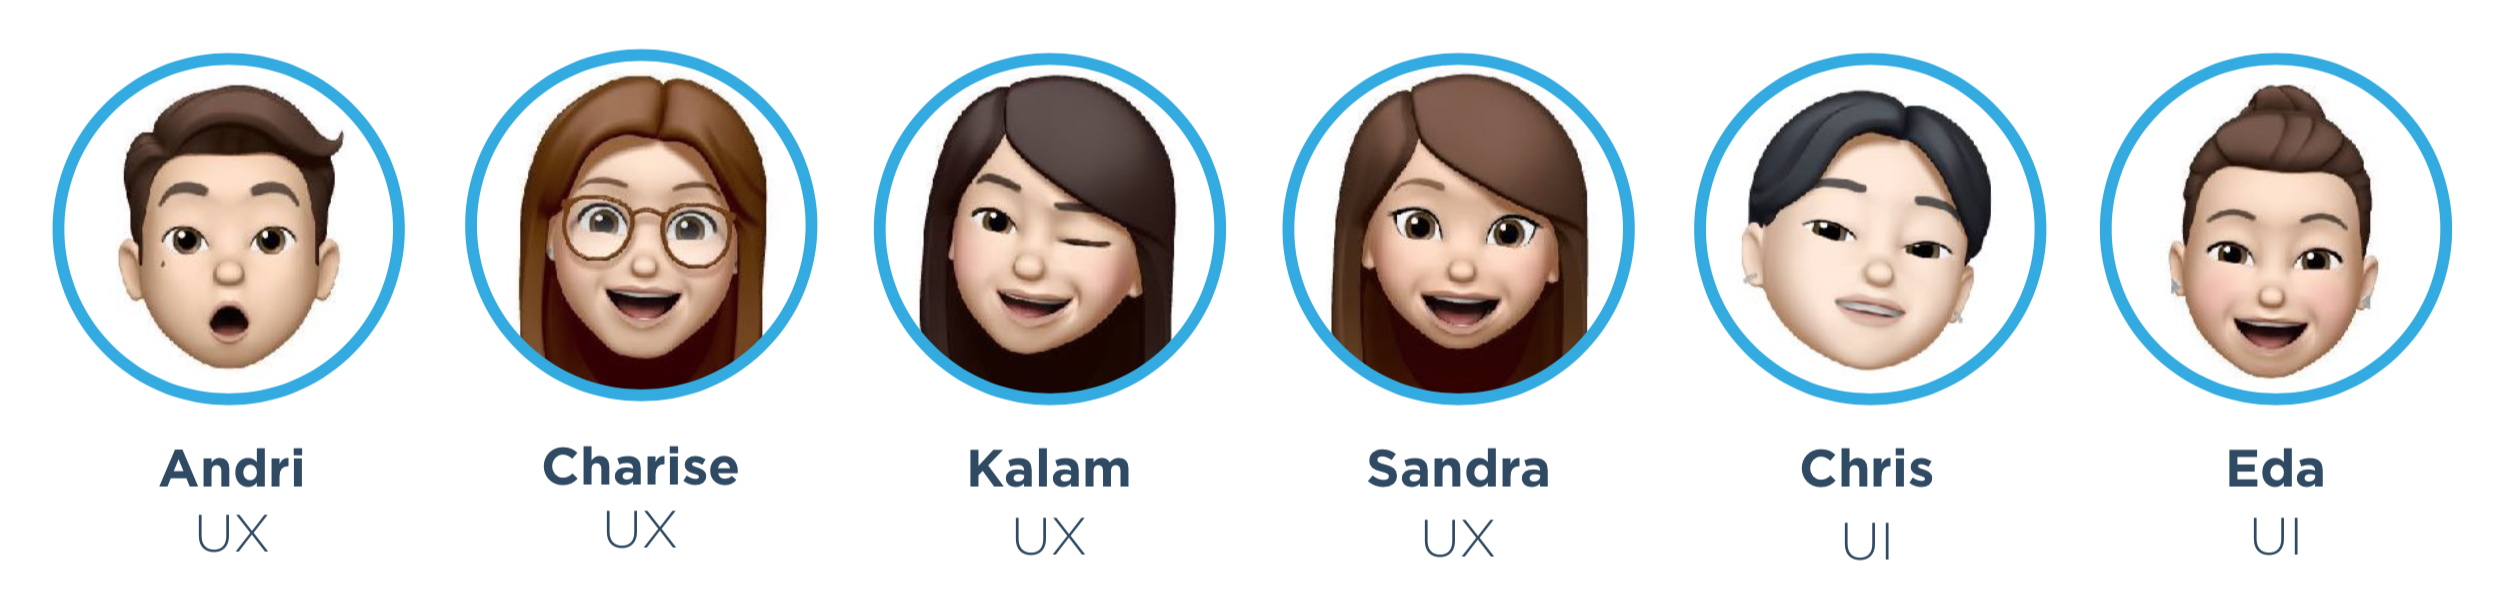 Design Team GUI